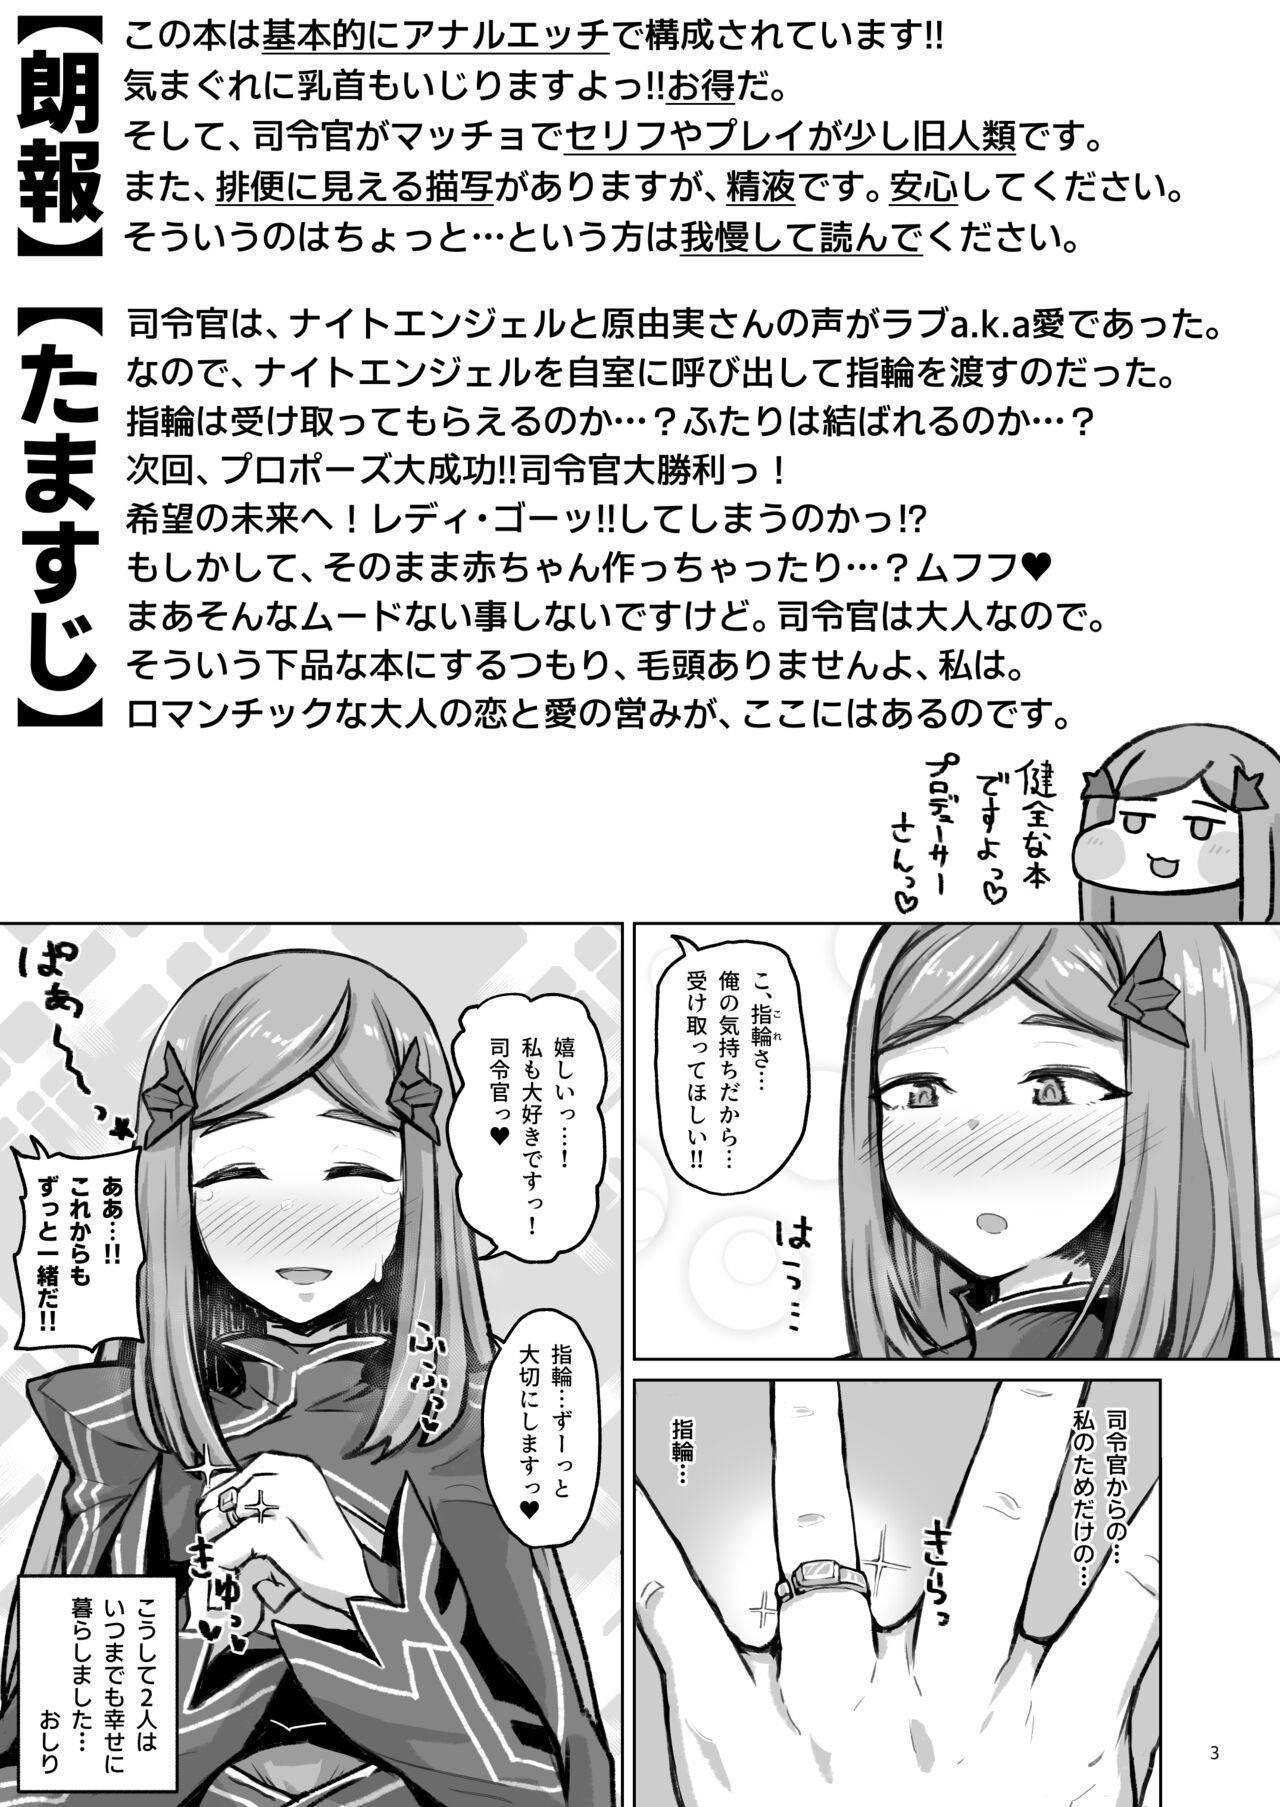 Bra Asuwohorijin Manga Gekijou - Last origin Freaky - Page 2